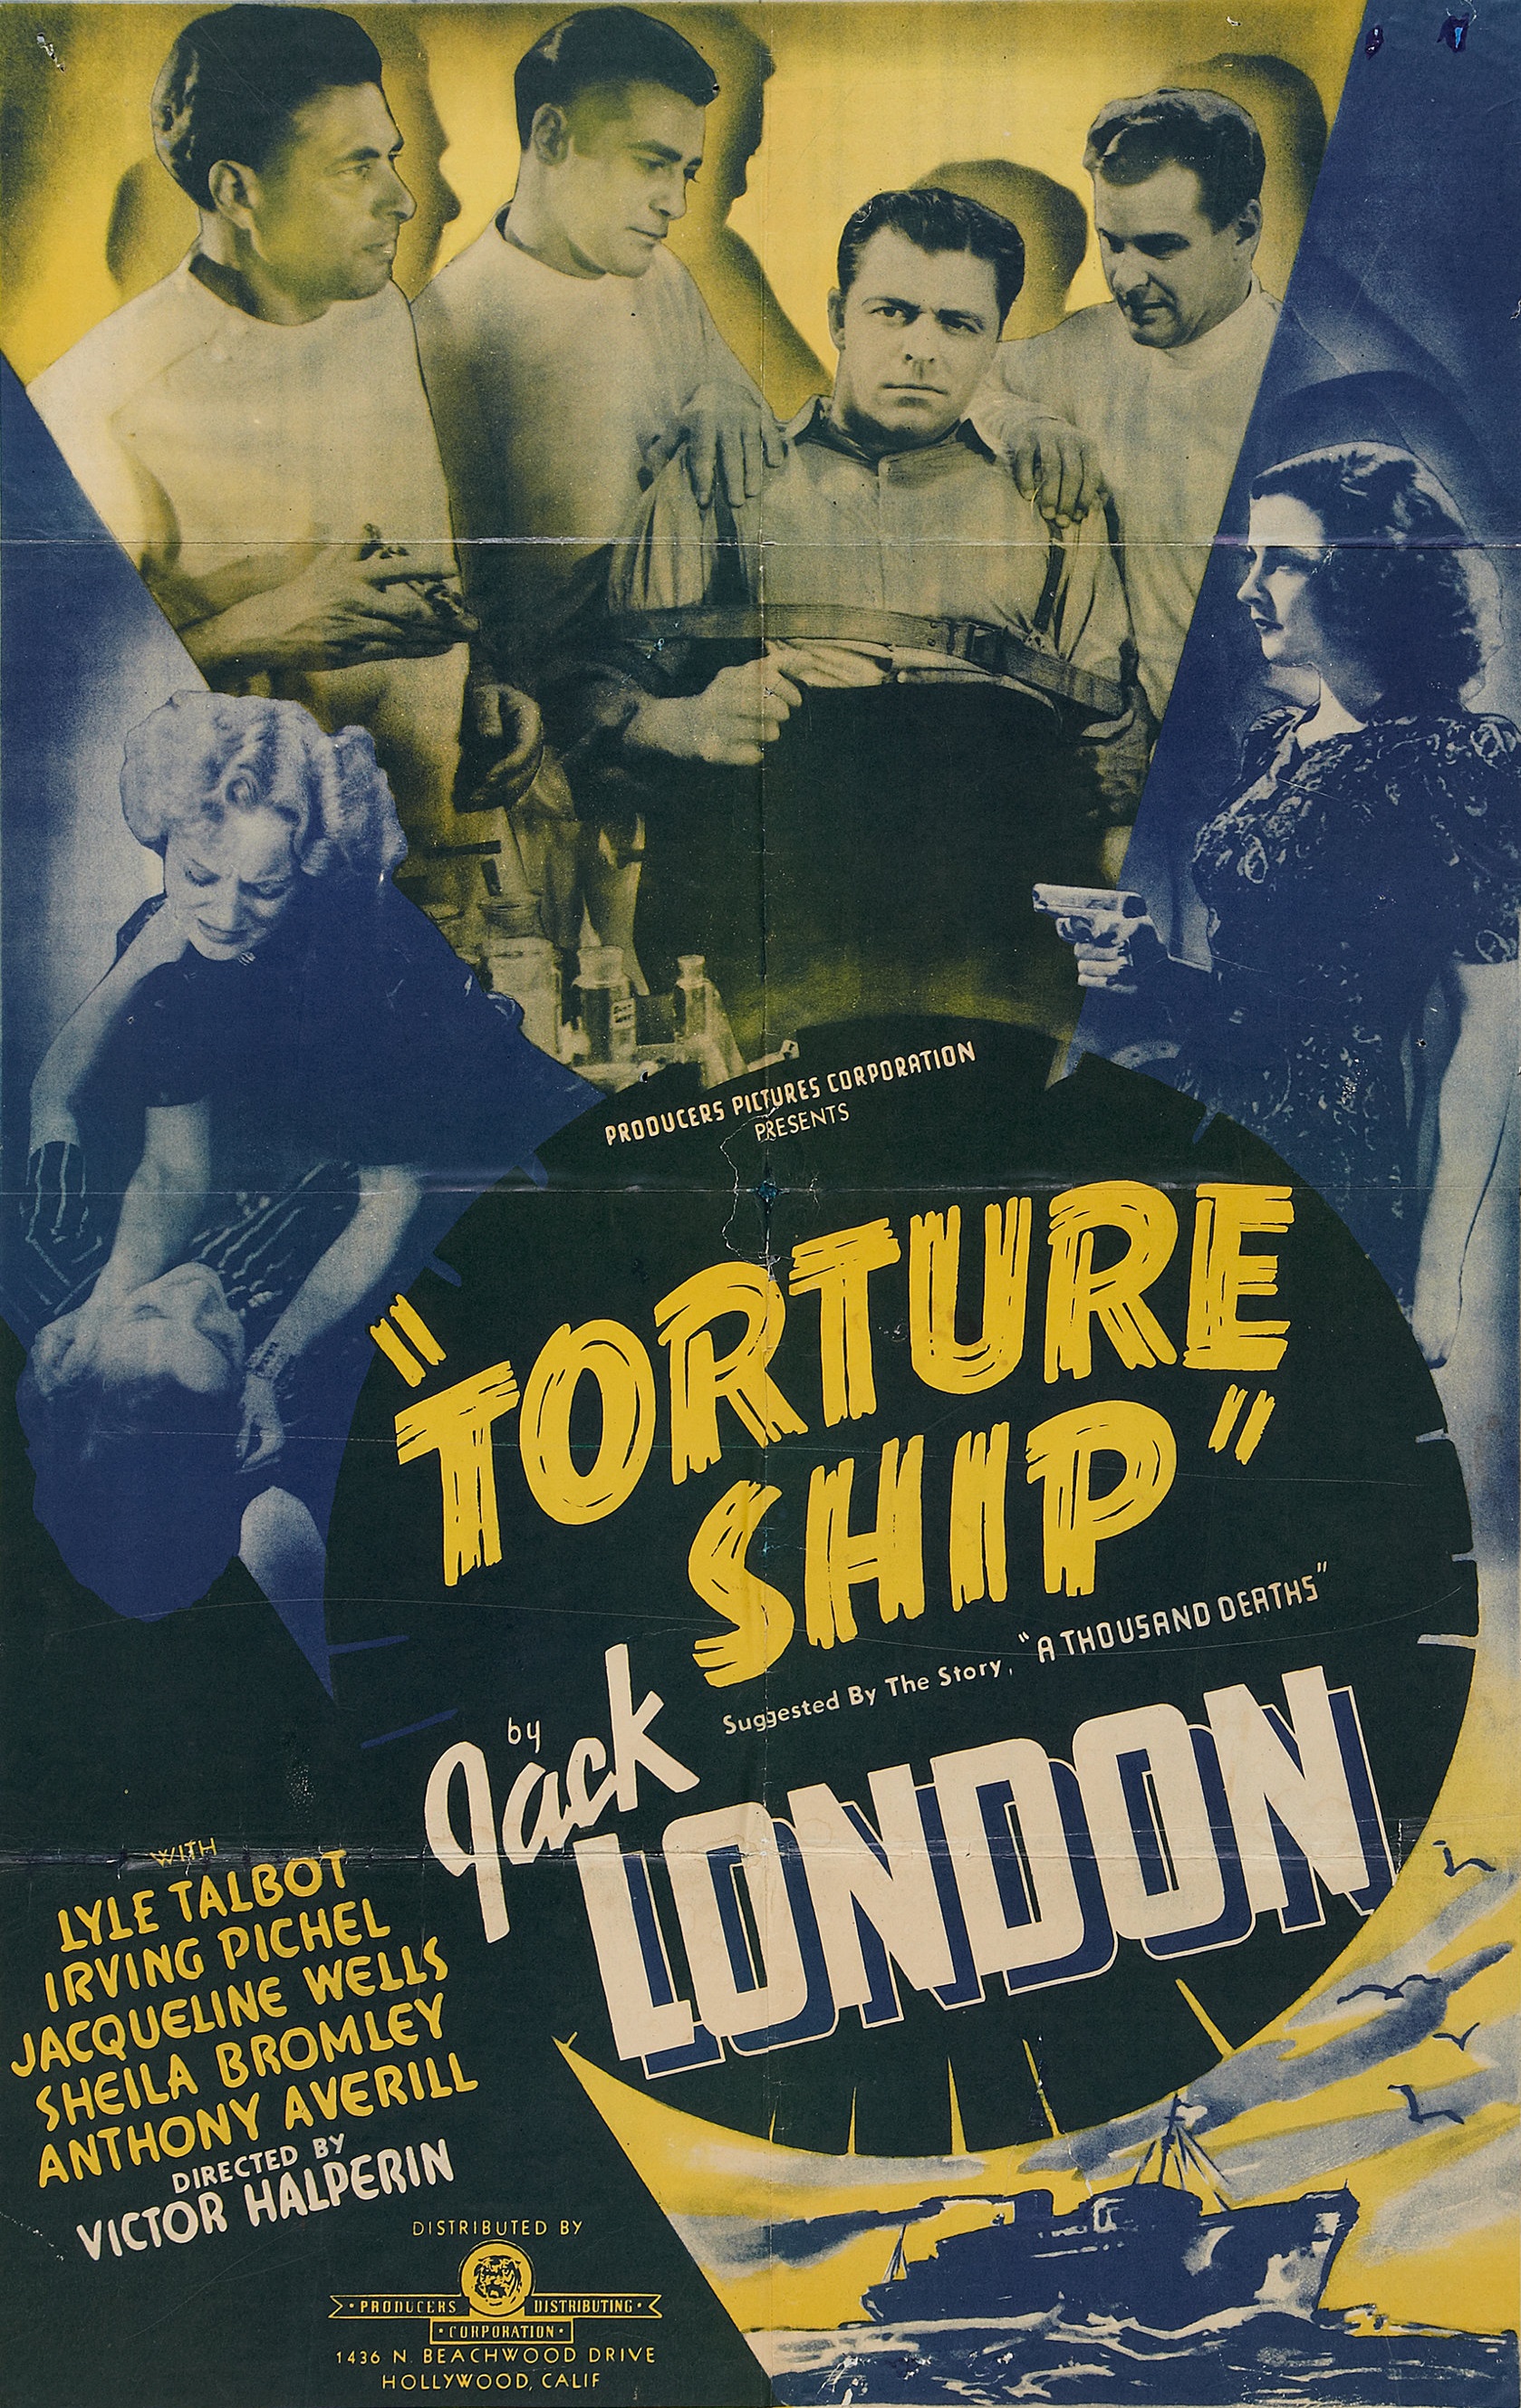 TORTURE SHIP (1939)